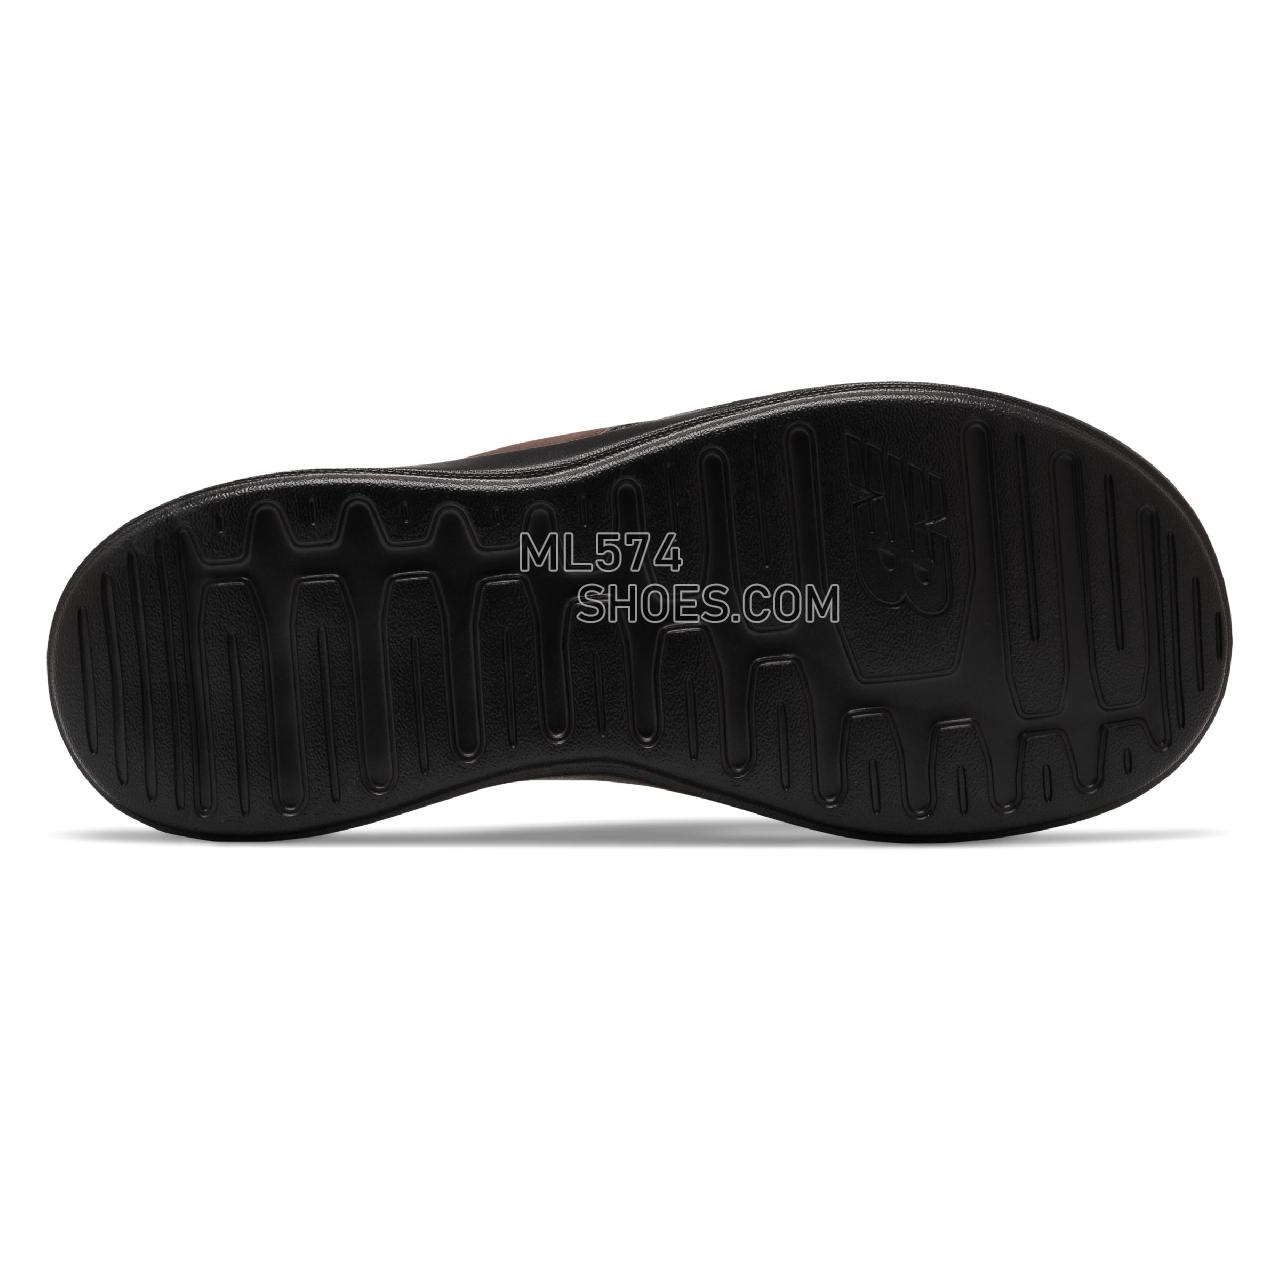 New Balance 340 - Men's Flip Flops - Brown with Black - SMT340B1